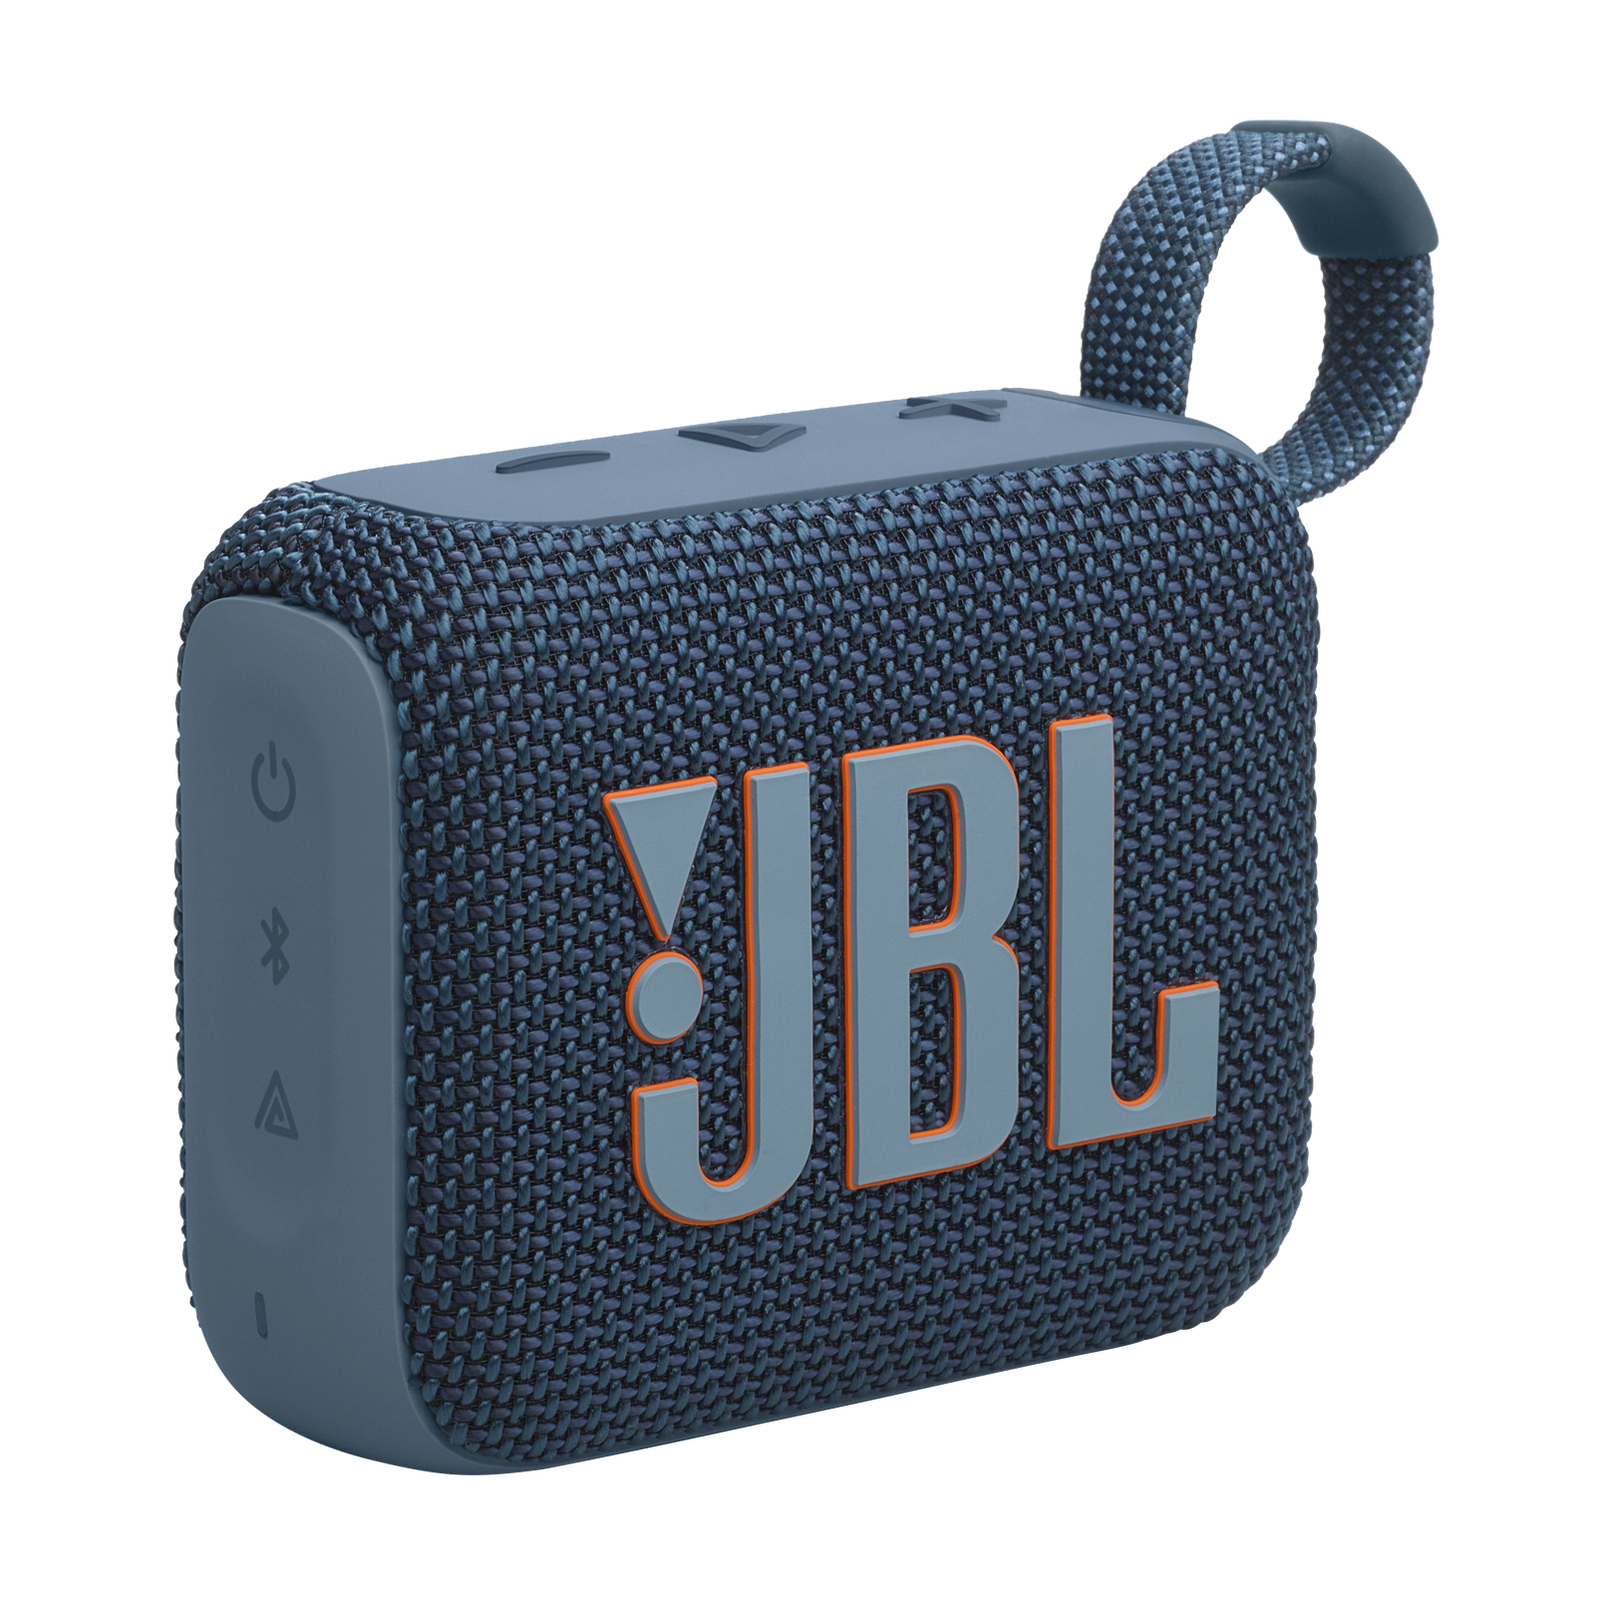 JBL Go 4 Blue Bluetooth Speaker